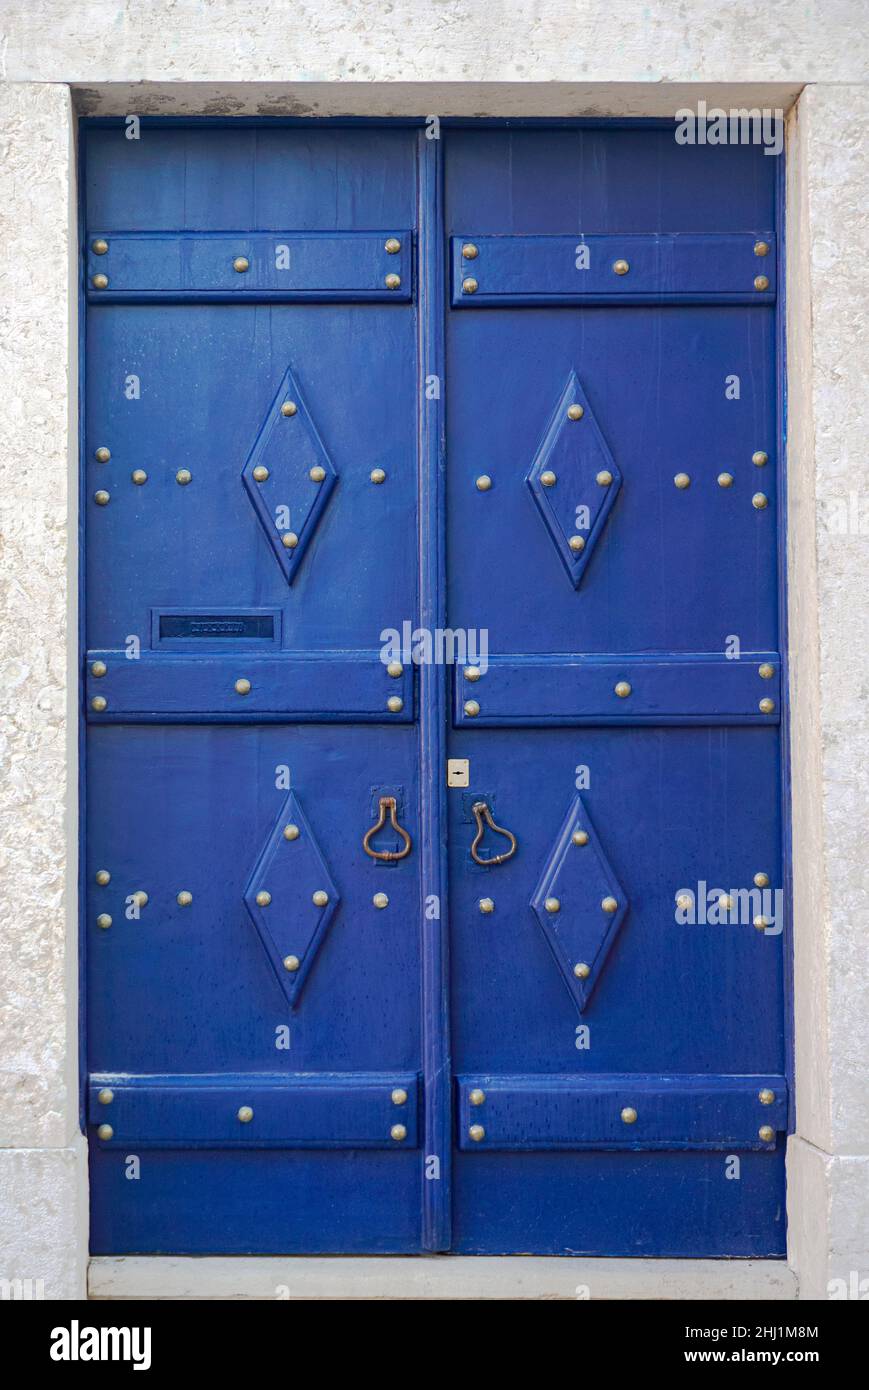 Very bright blue door with metallic elements Stock Photo